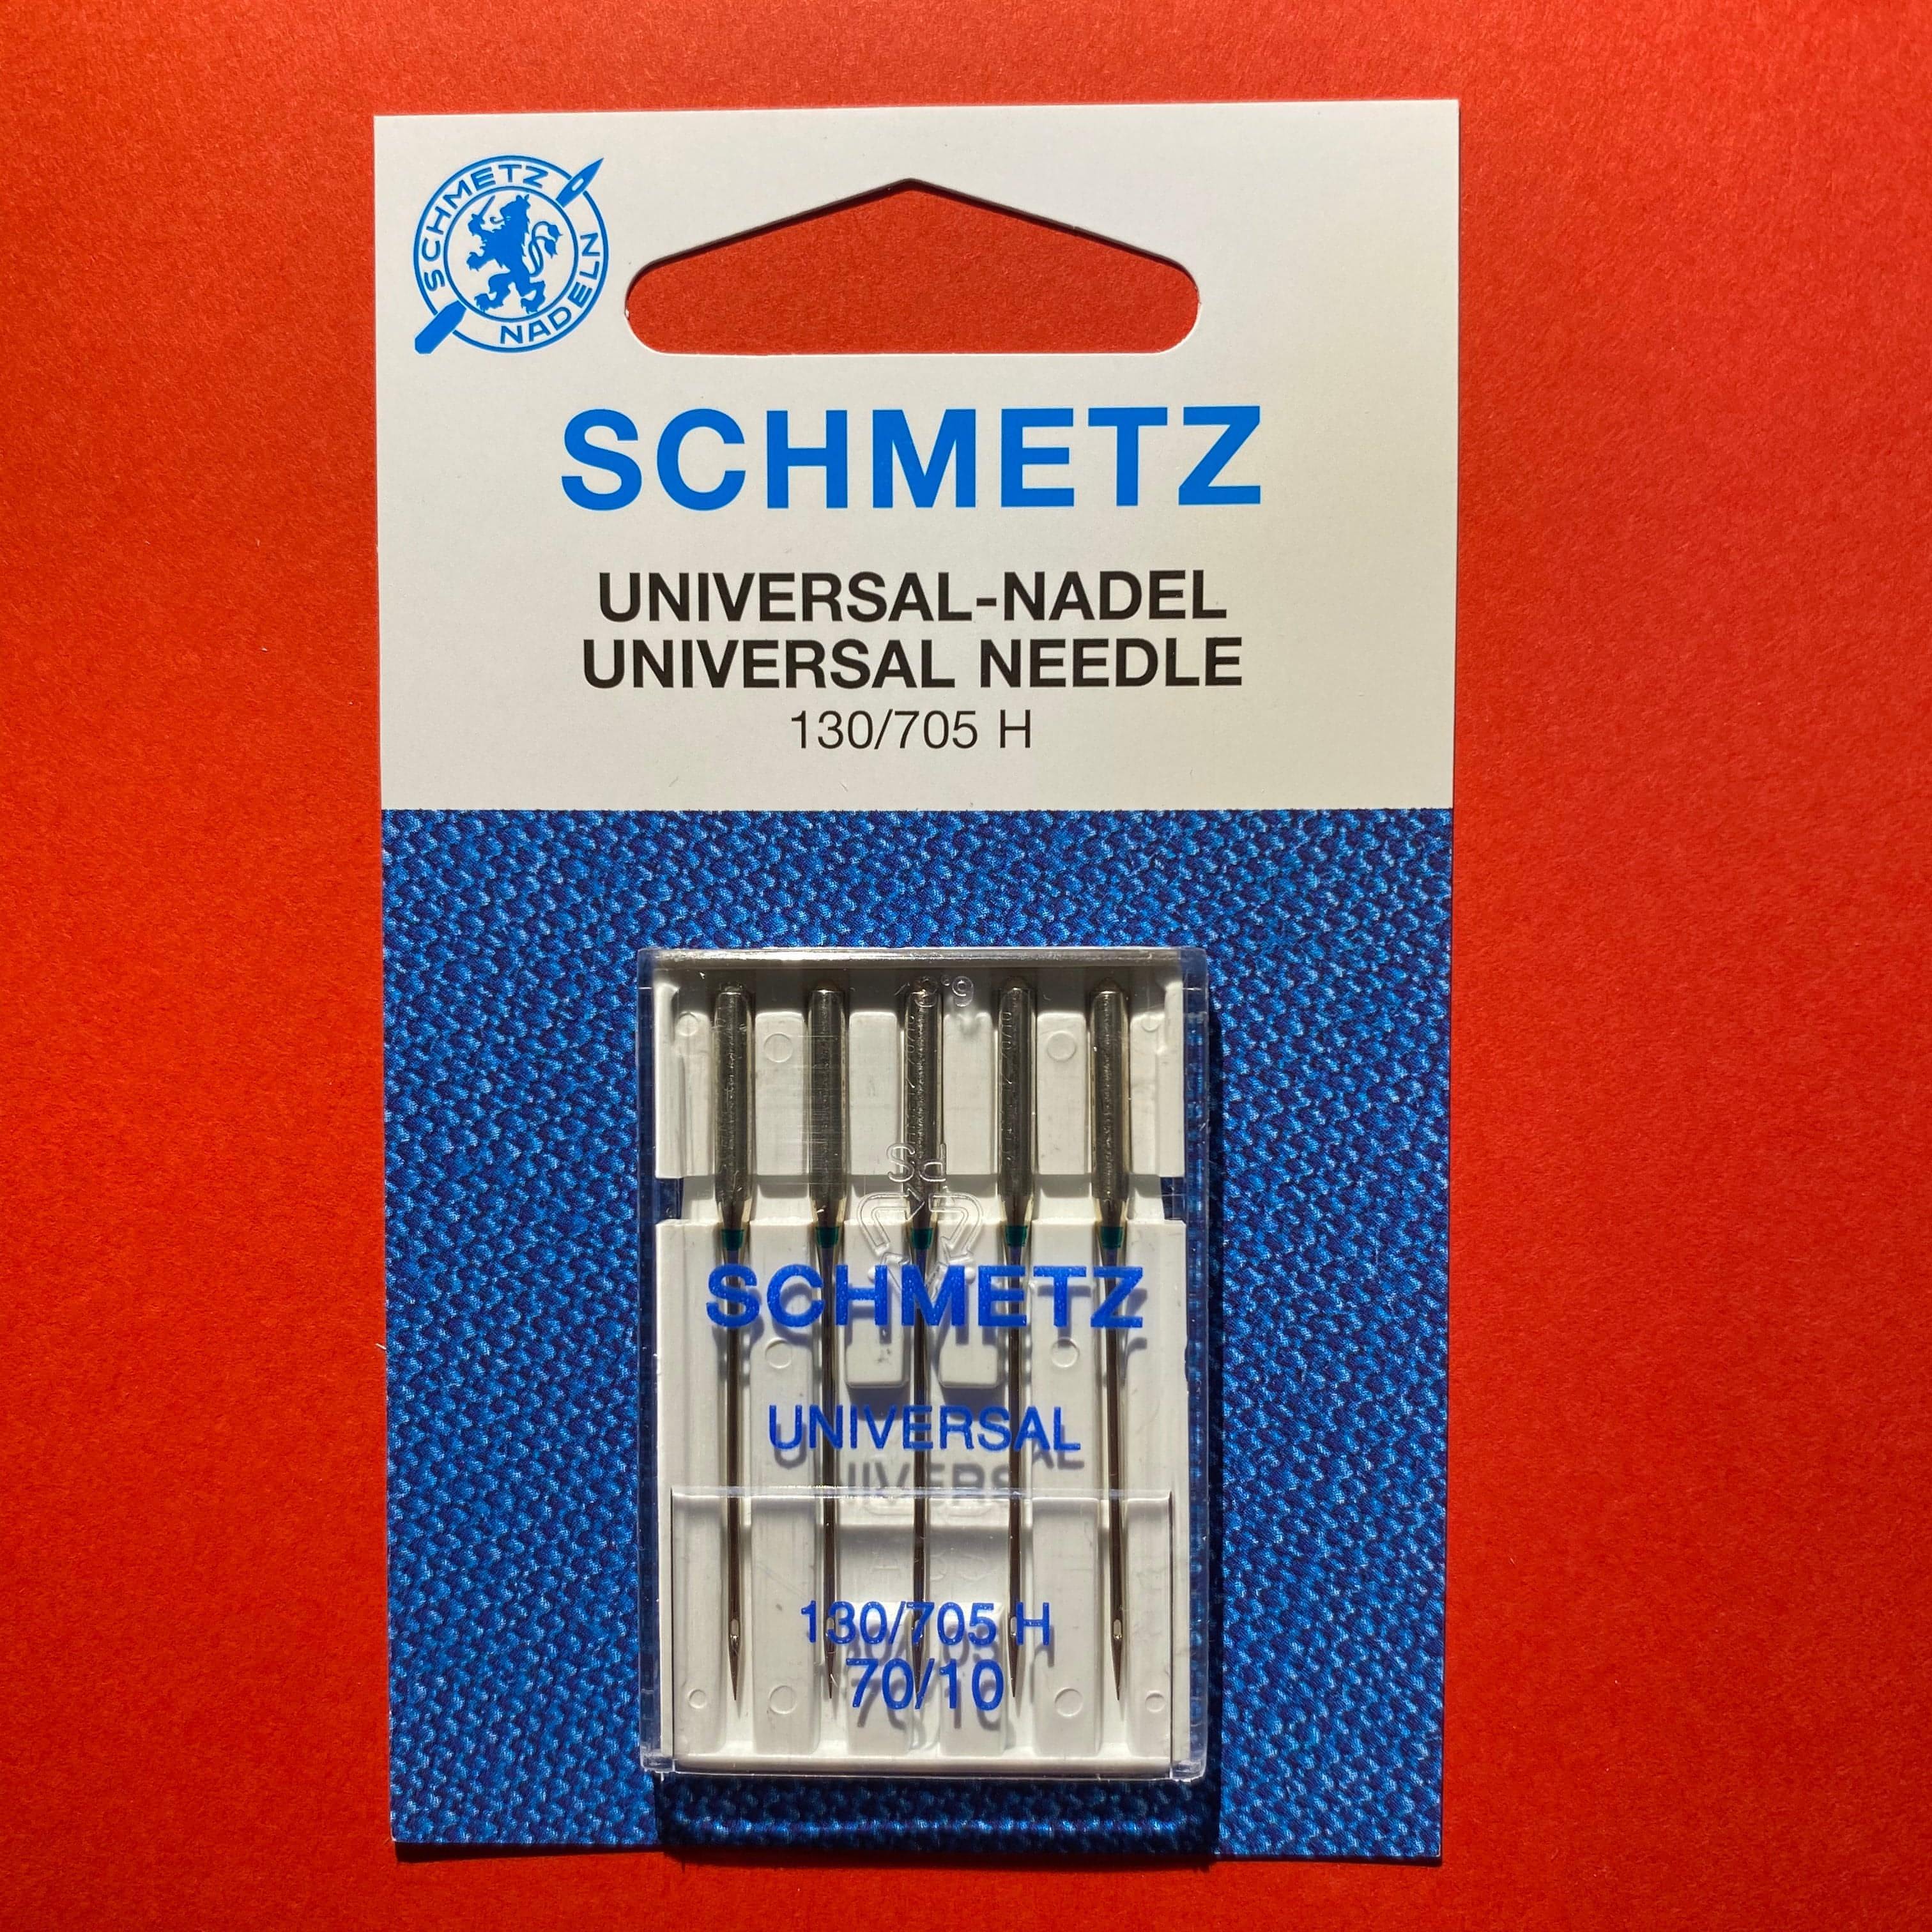 Schmetz Universal Needles 130/705 H 70/10 Sheer to lightweight - 5 pack